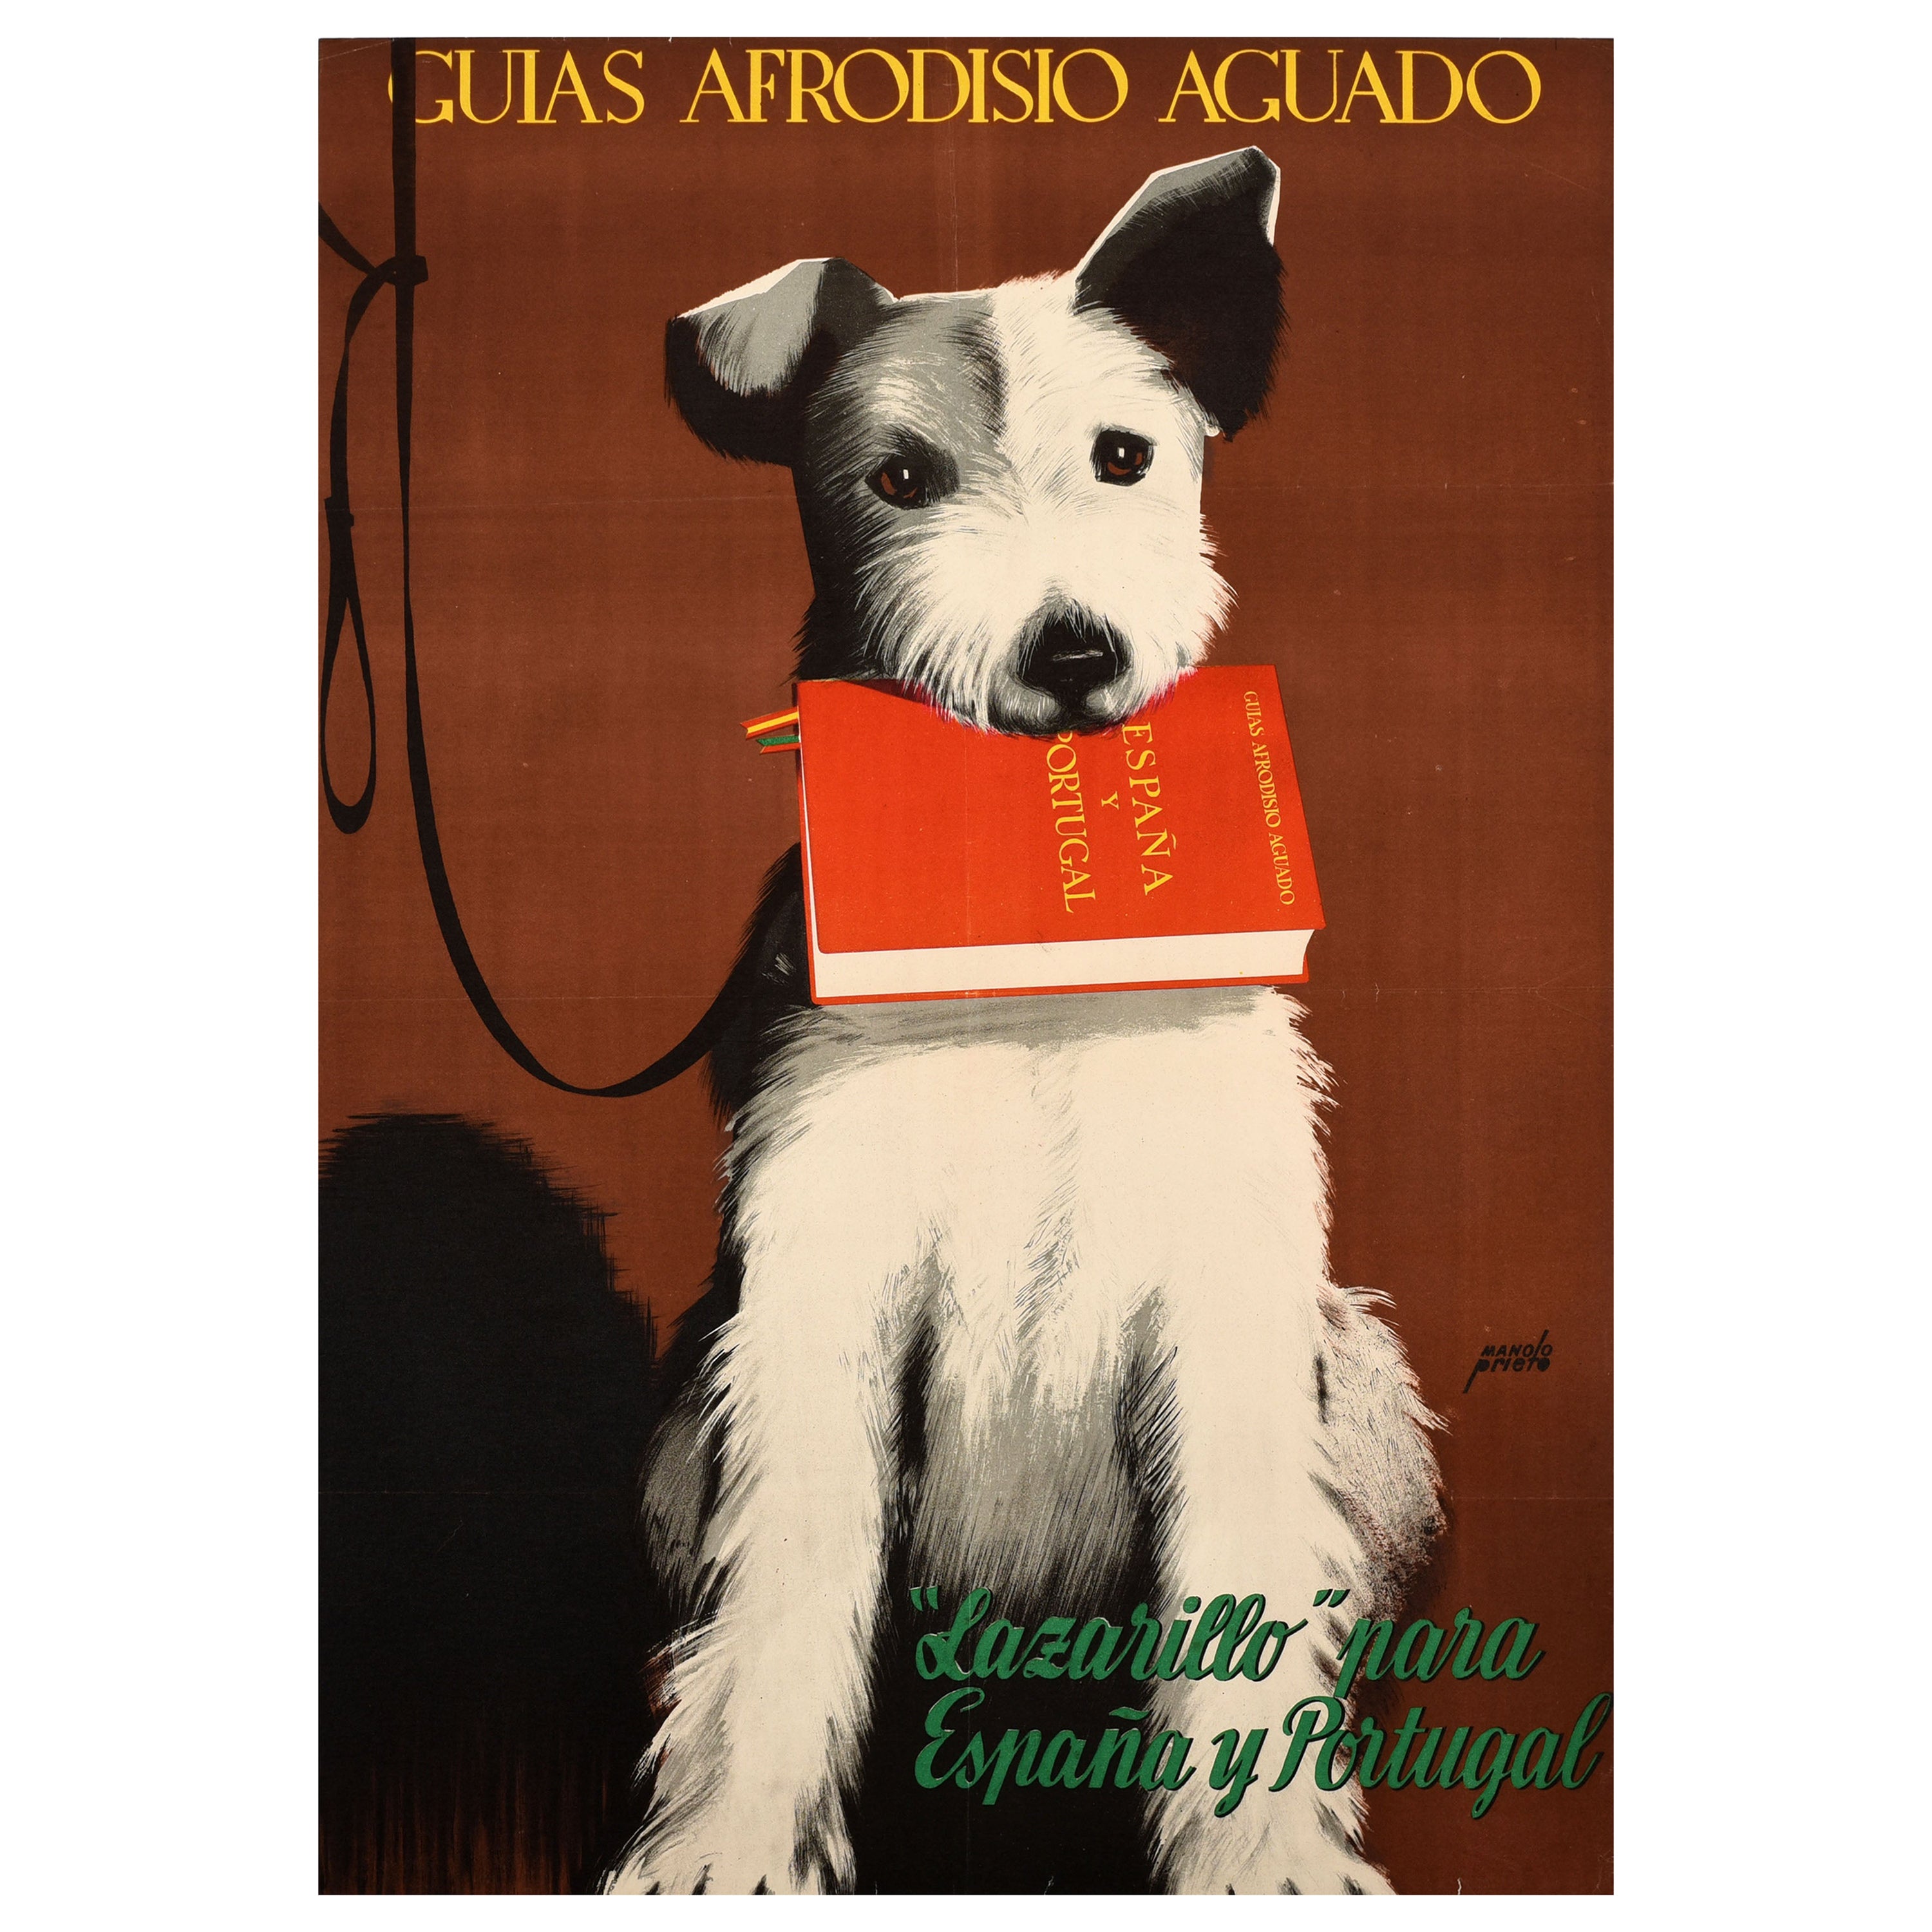 Original Vintage Advertising Poster Spain Portugal Travel Guide Book Terrier Dog For Sale